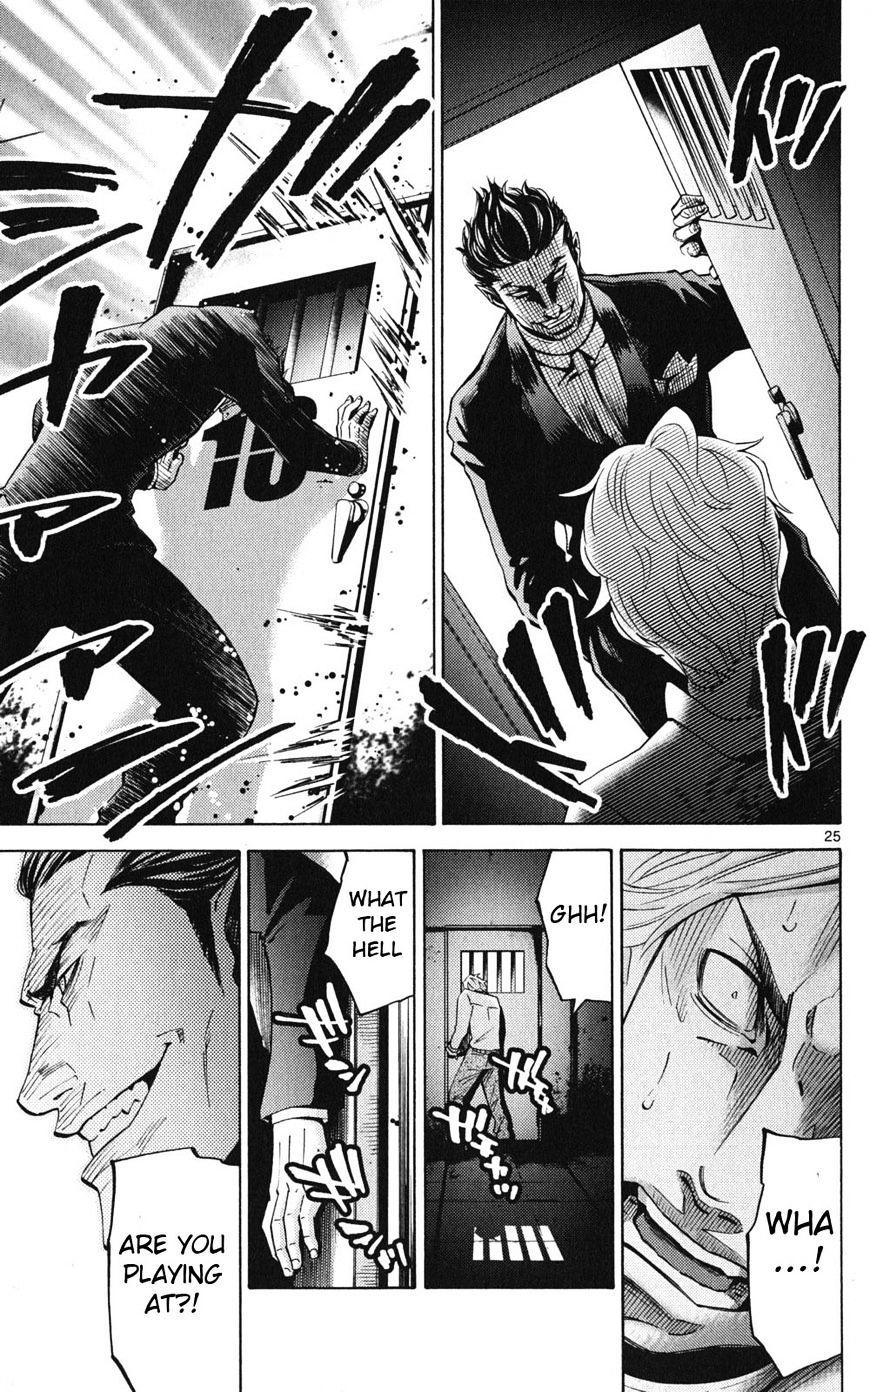 Imawa No Kuni No Alice Chapter 47 : Jack Of Hearts (3) page 27 - Mangakakalot